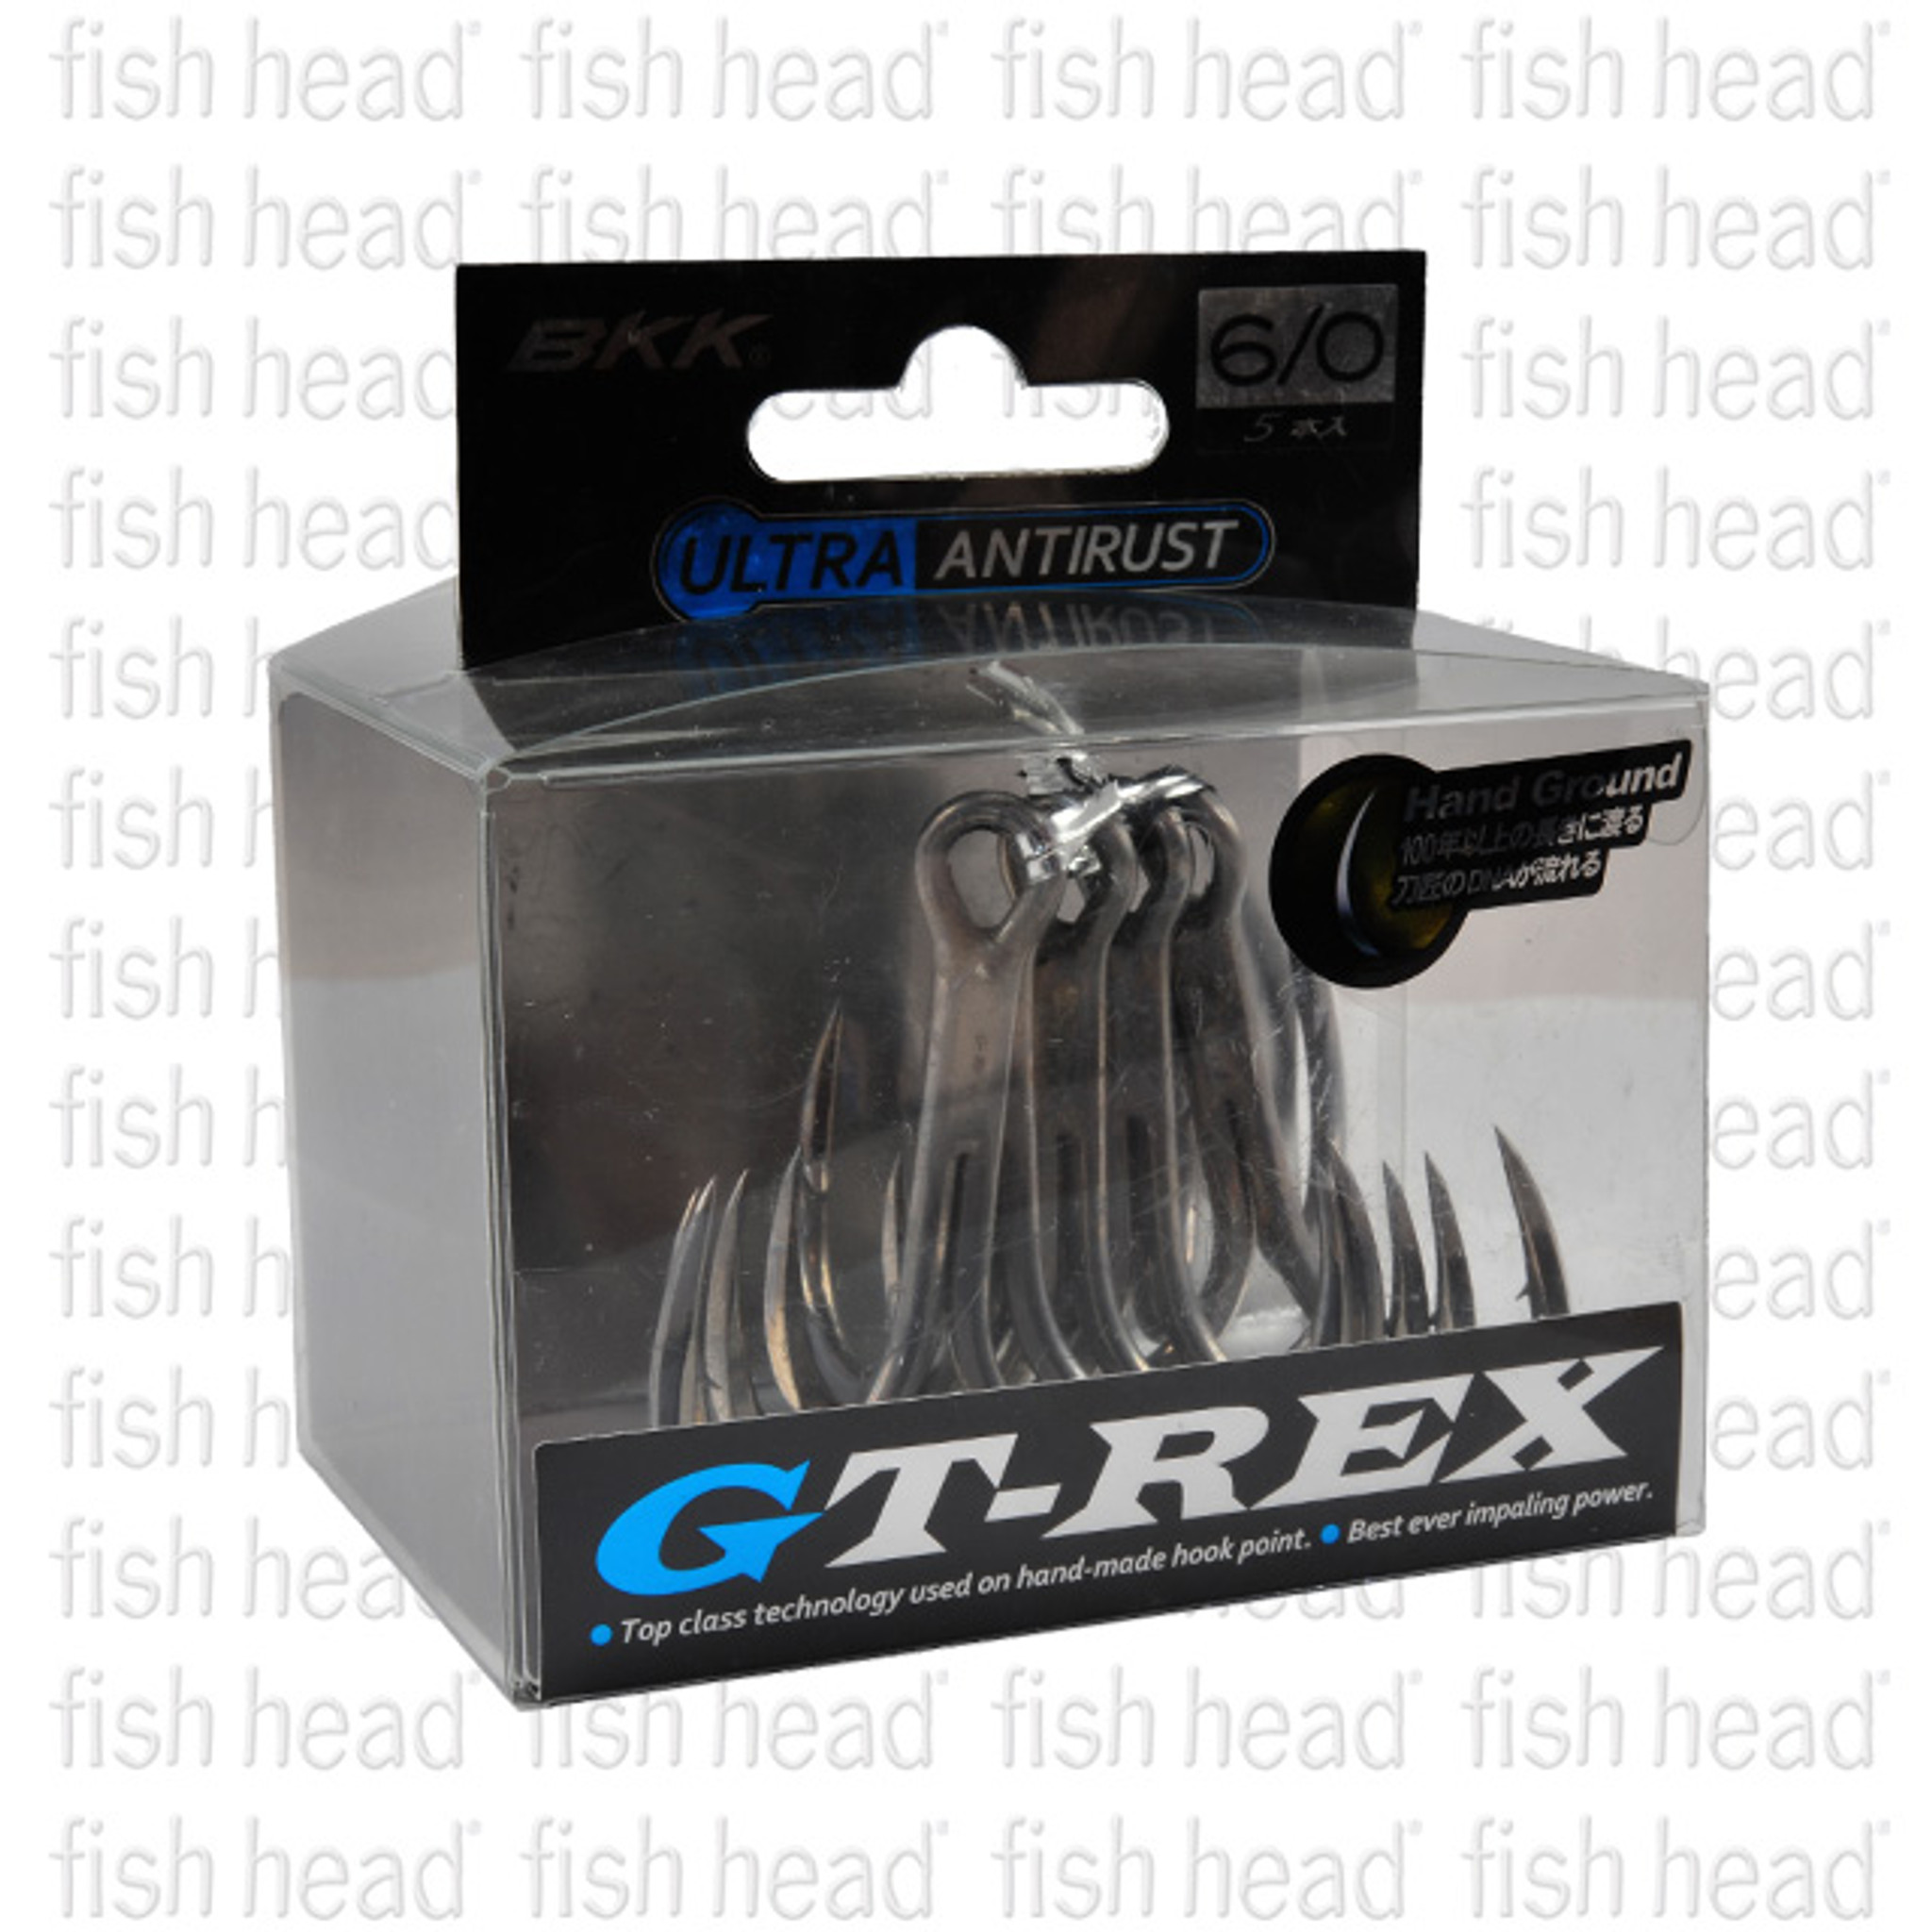 BKK GT-REX Treble Hook, 7/0, 4-Pack, 7X, Saltwater Ultra-Antirust  Coating, Hand Ground